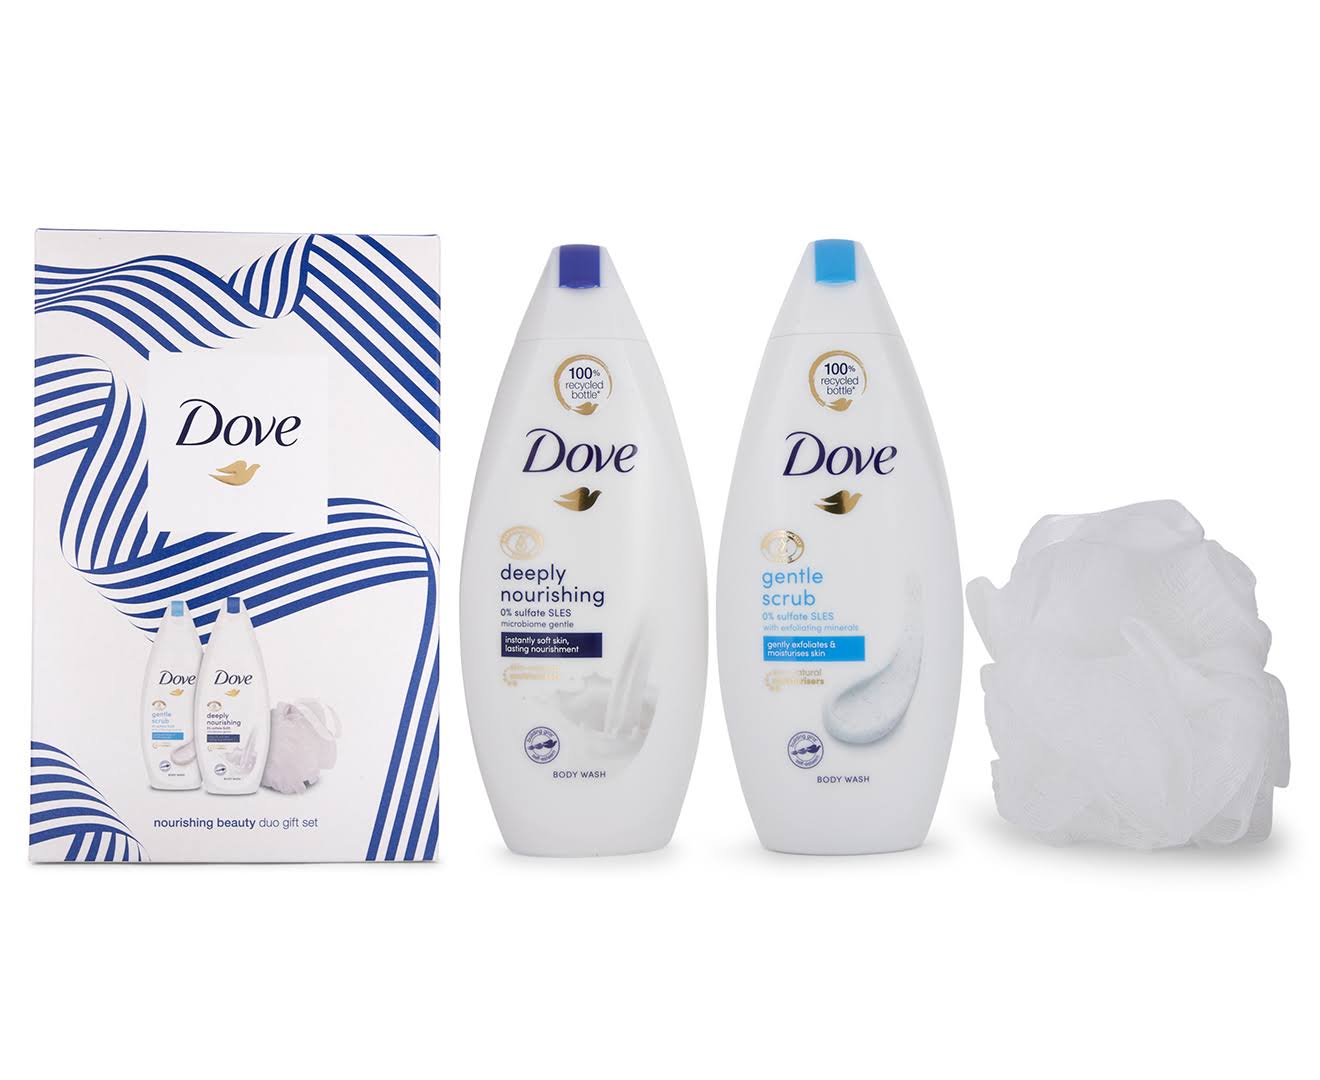 Dove 3-Piece Nourishing Beauty Body Care Gift Set - AfterPay & zipPay Available